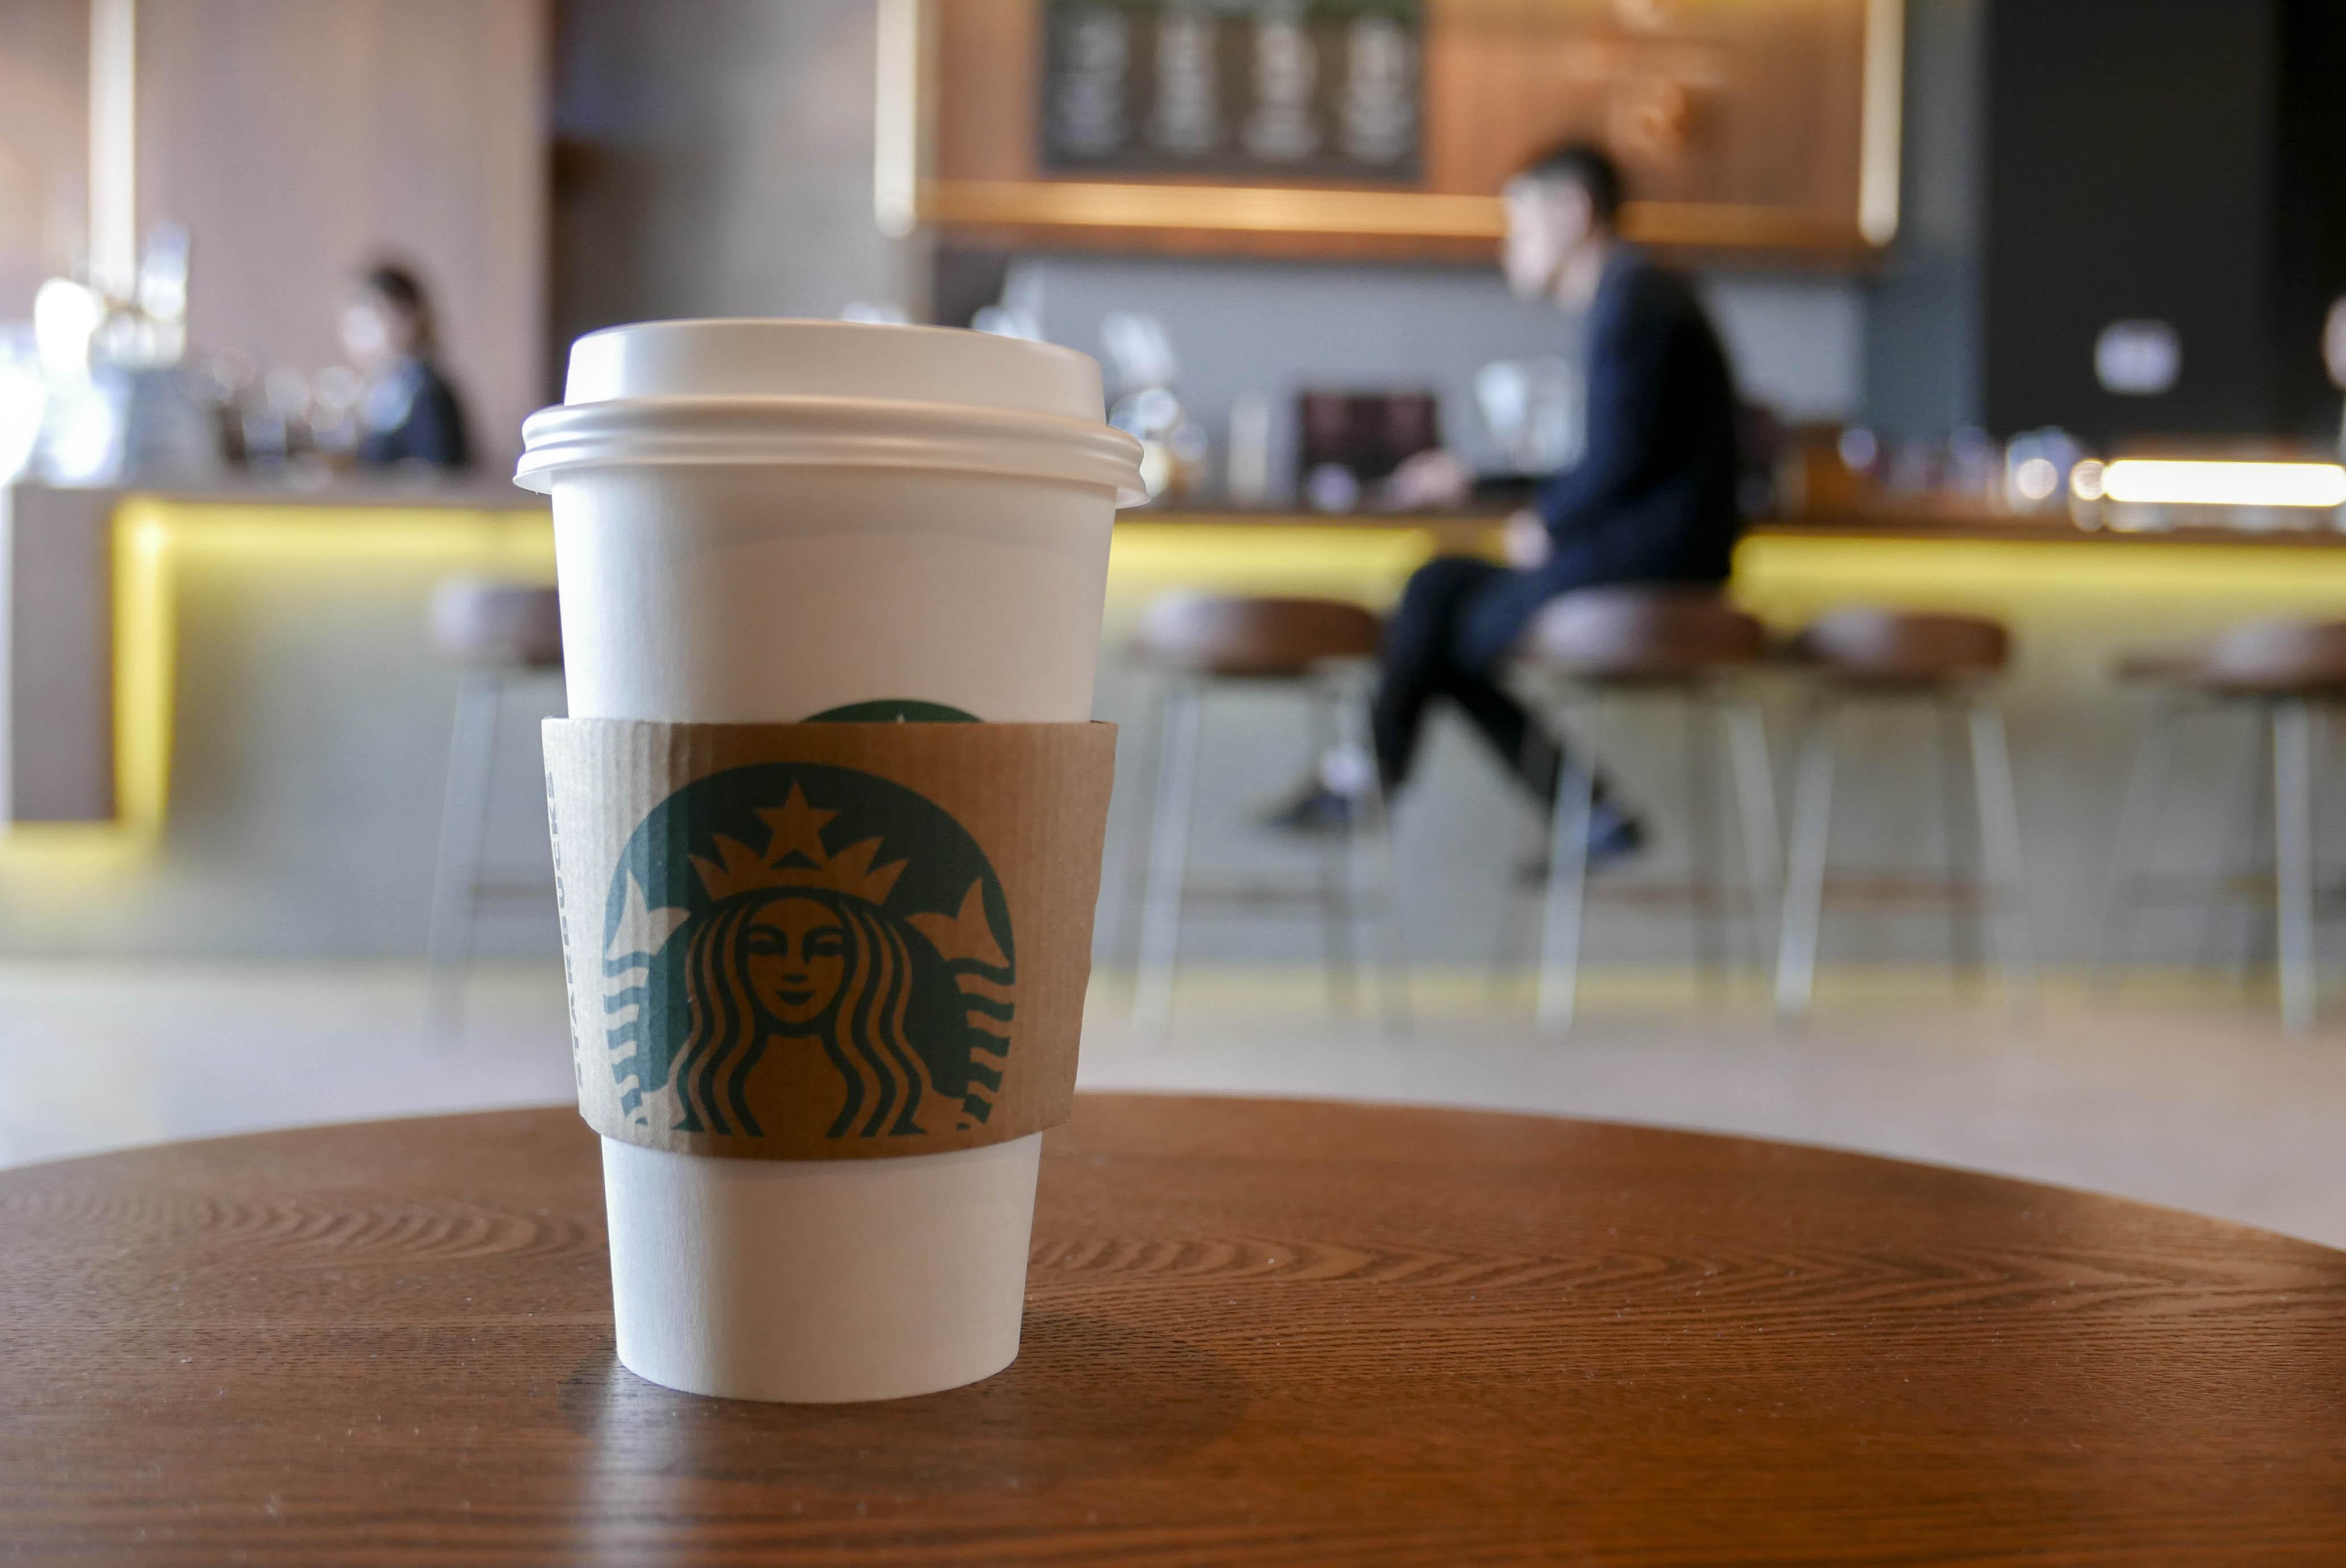 Tall, grande, venti: pourquoi les gobelets Starbucks portent-ils ces noms?  - Libelle Lekker